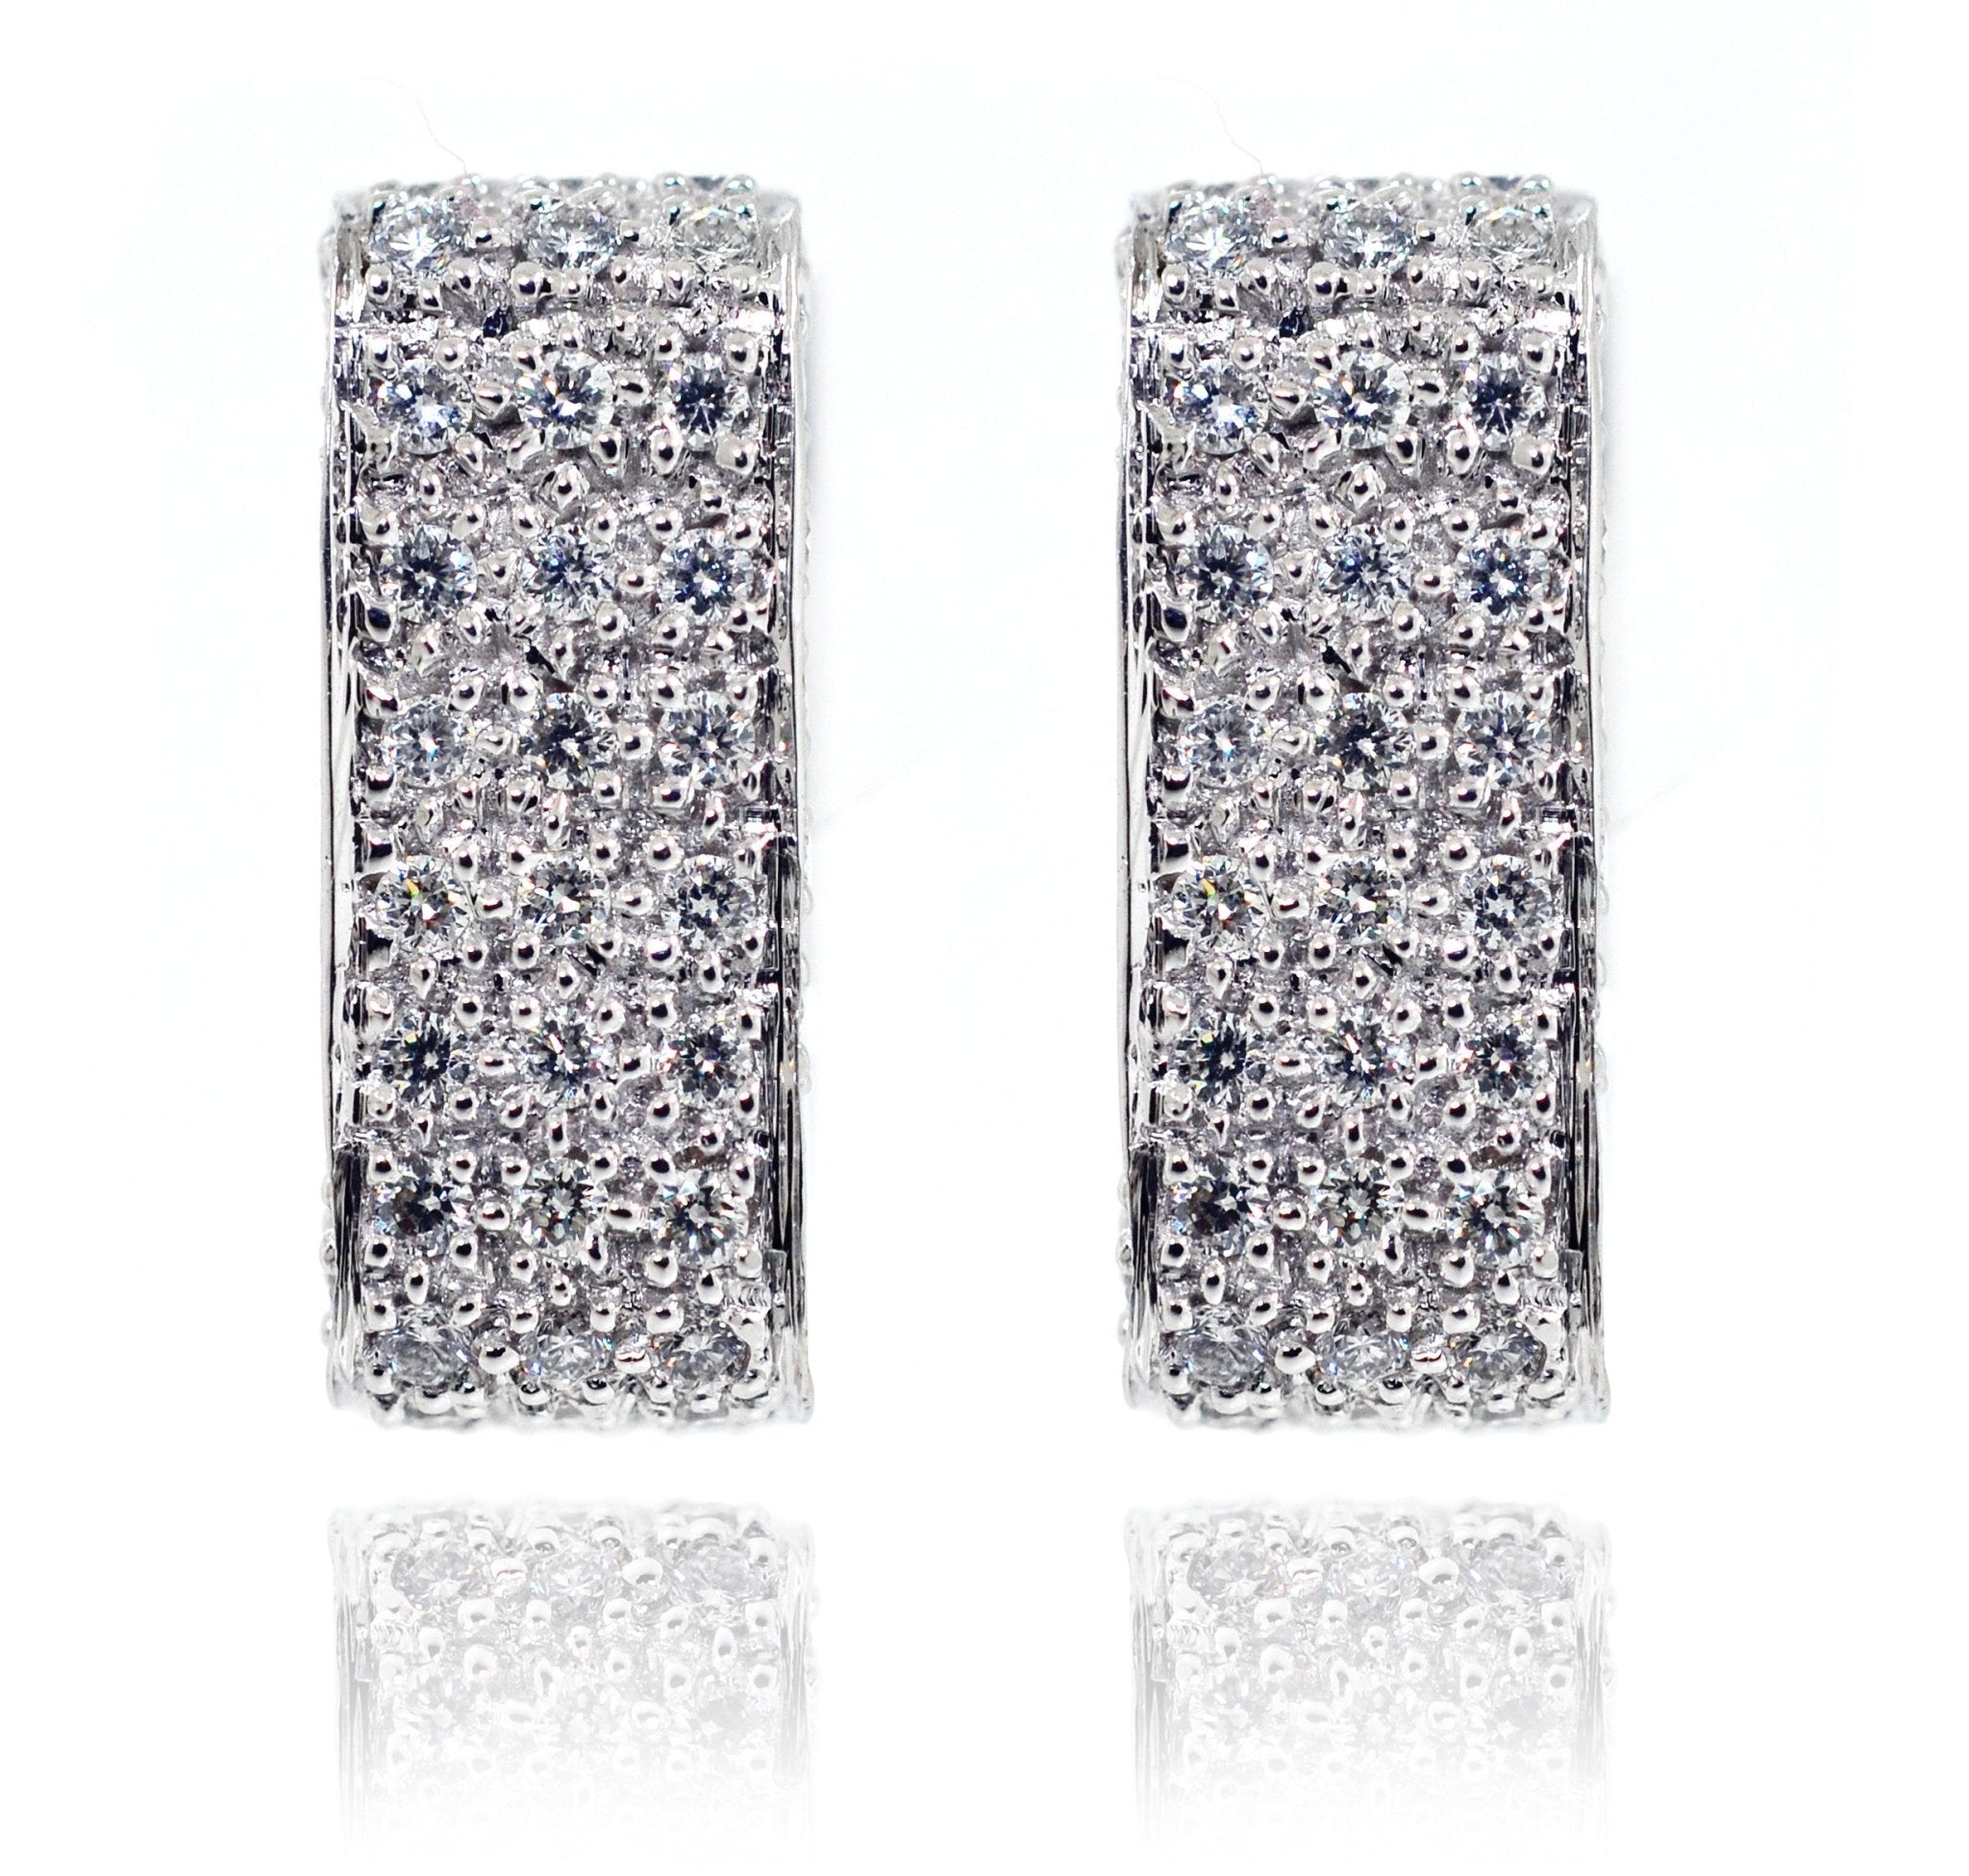 18ct White Gold Square Pave Diamond Earrings - ForeverJewels Design Studio 8